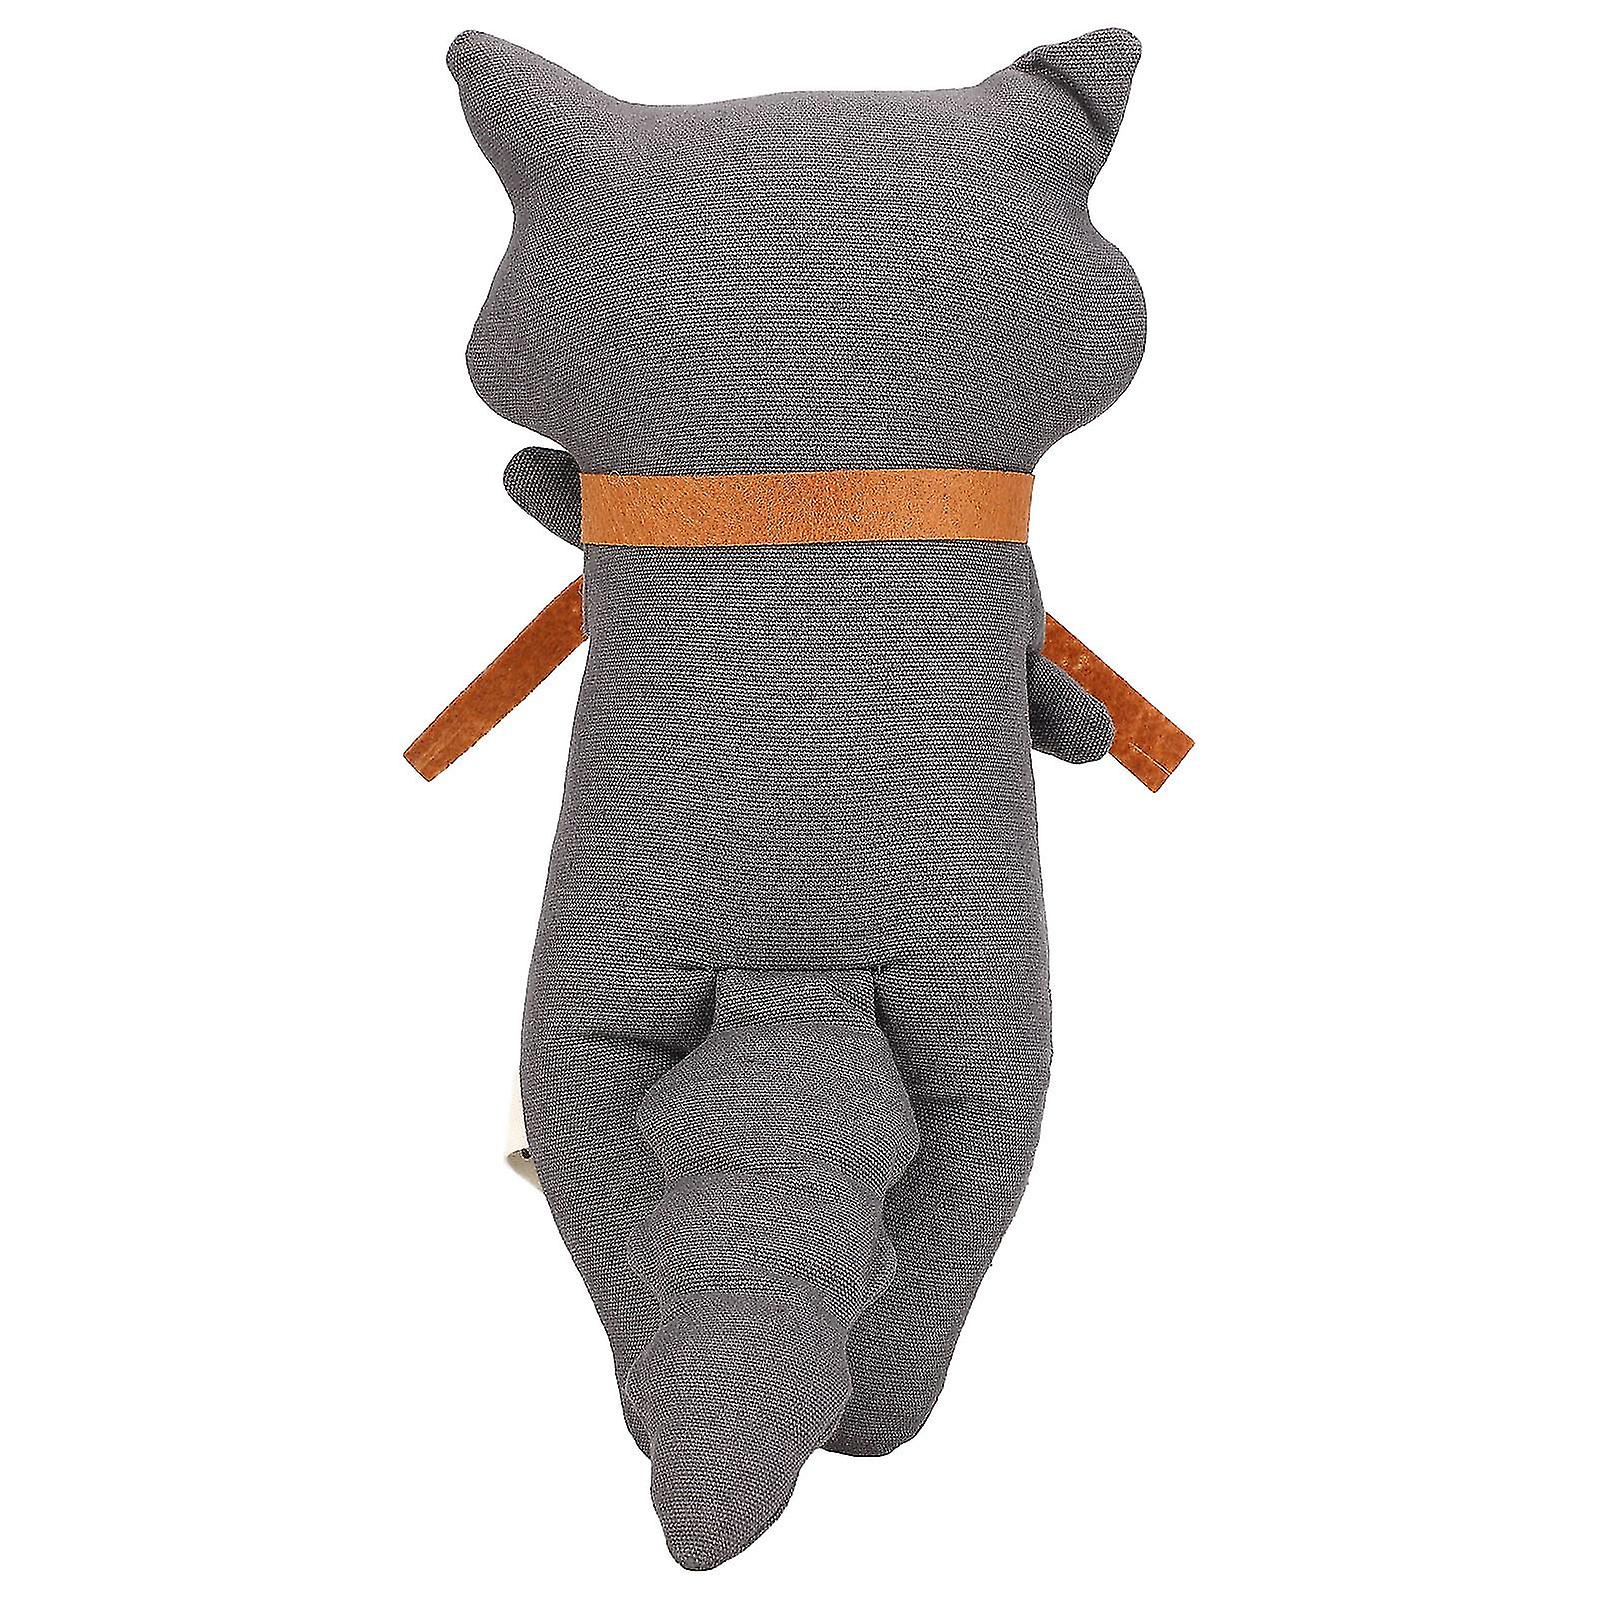 Stuffed Animal Toys PP Cotton Cartoon Characters Appease Accompany Educational Raccoon Doll